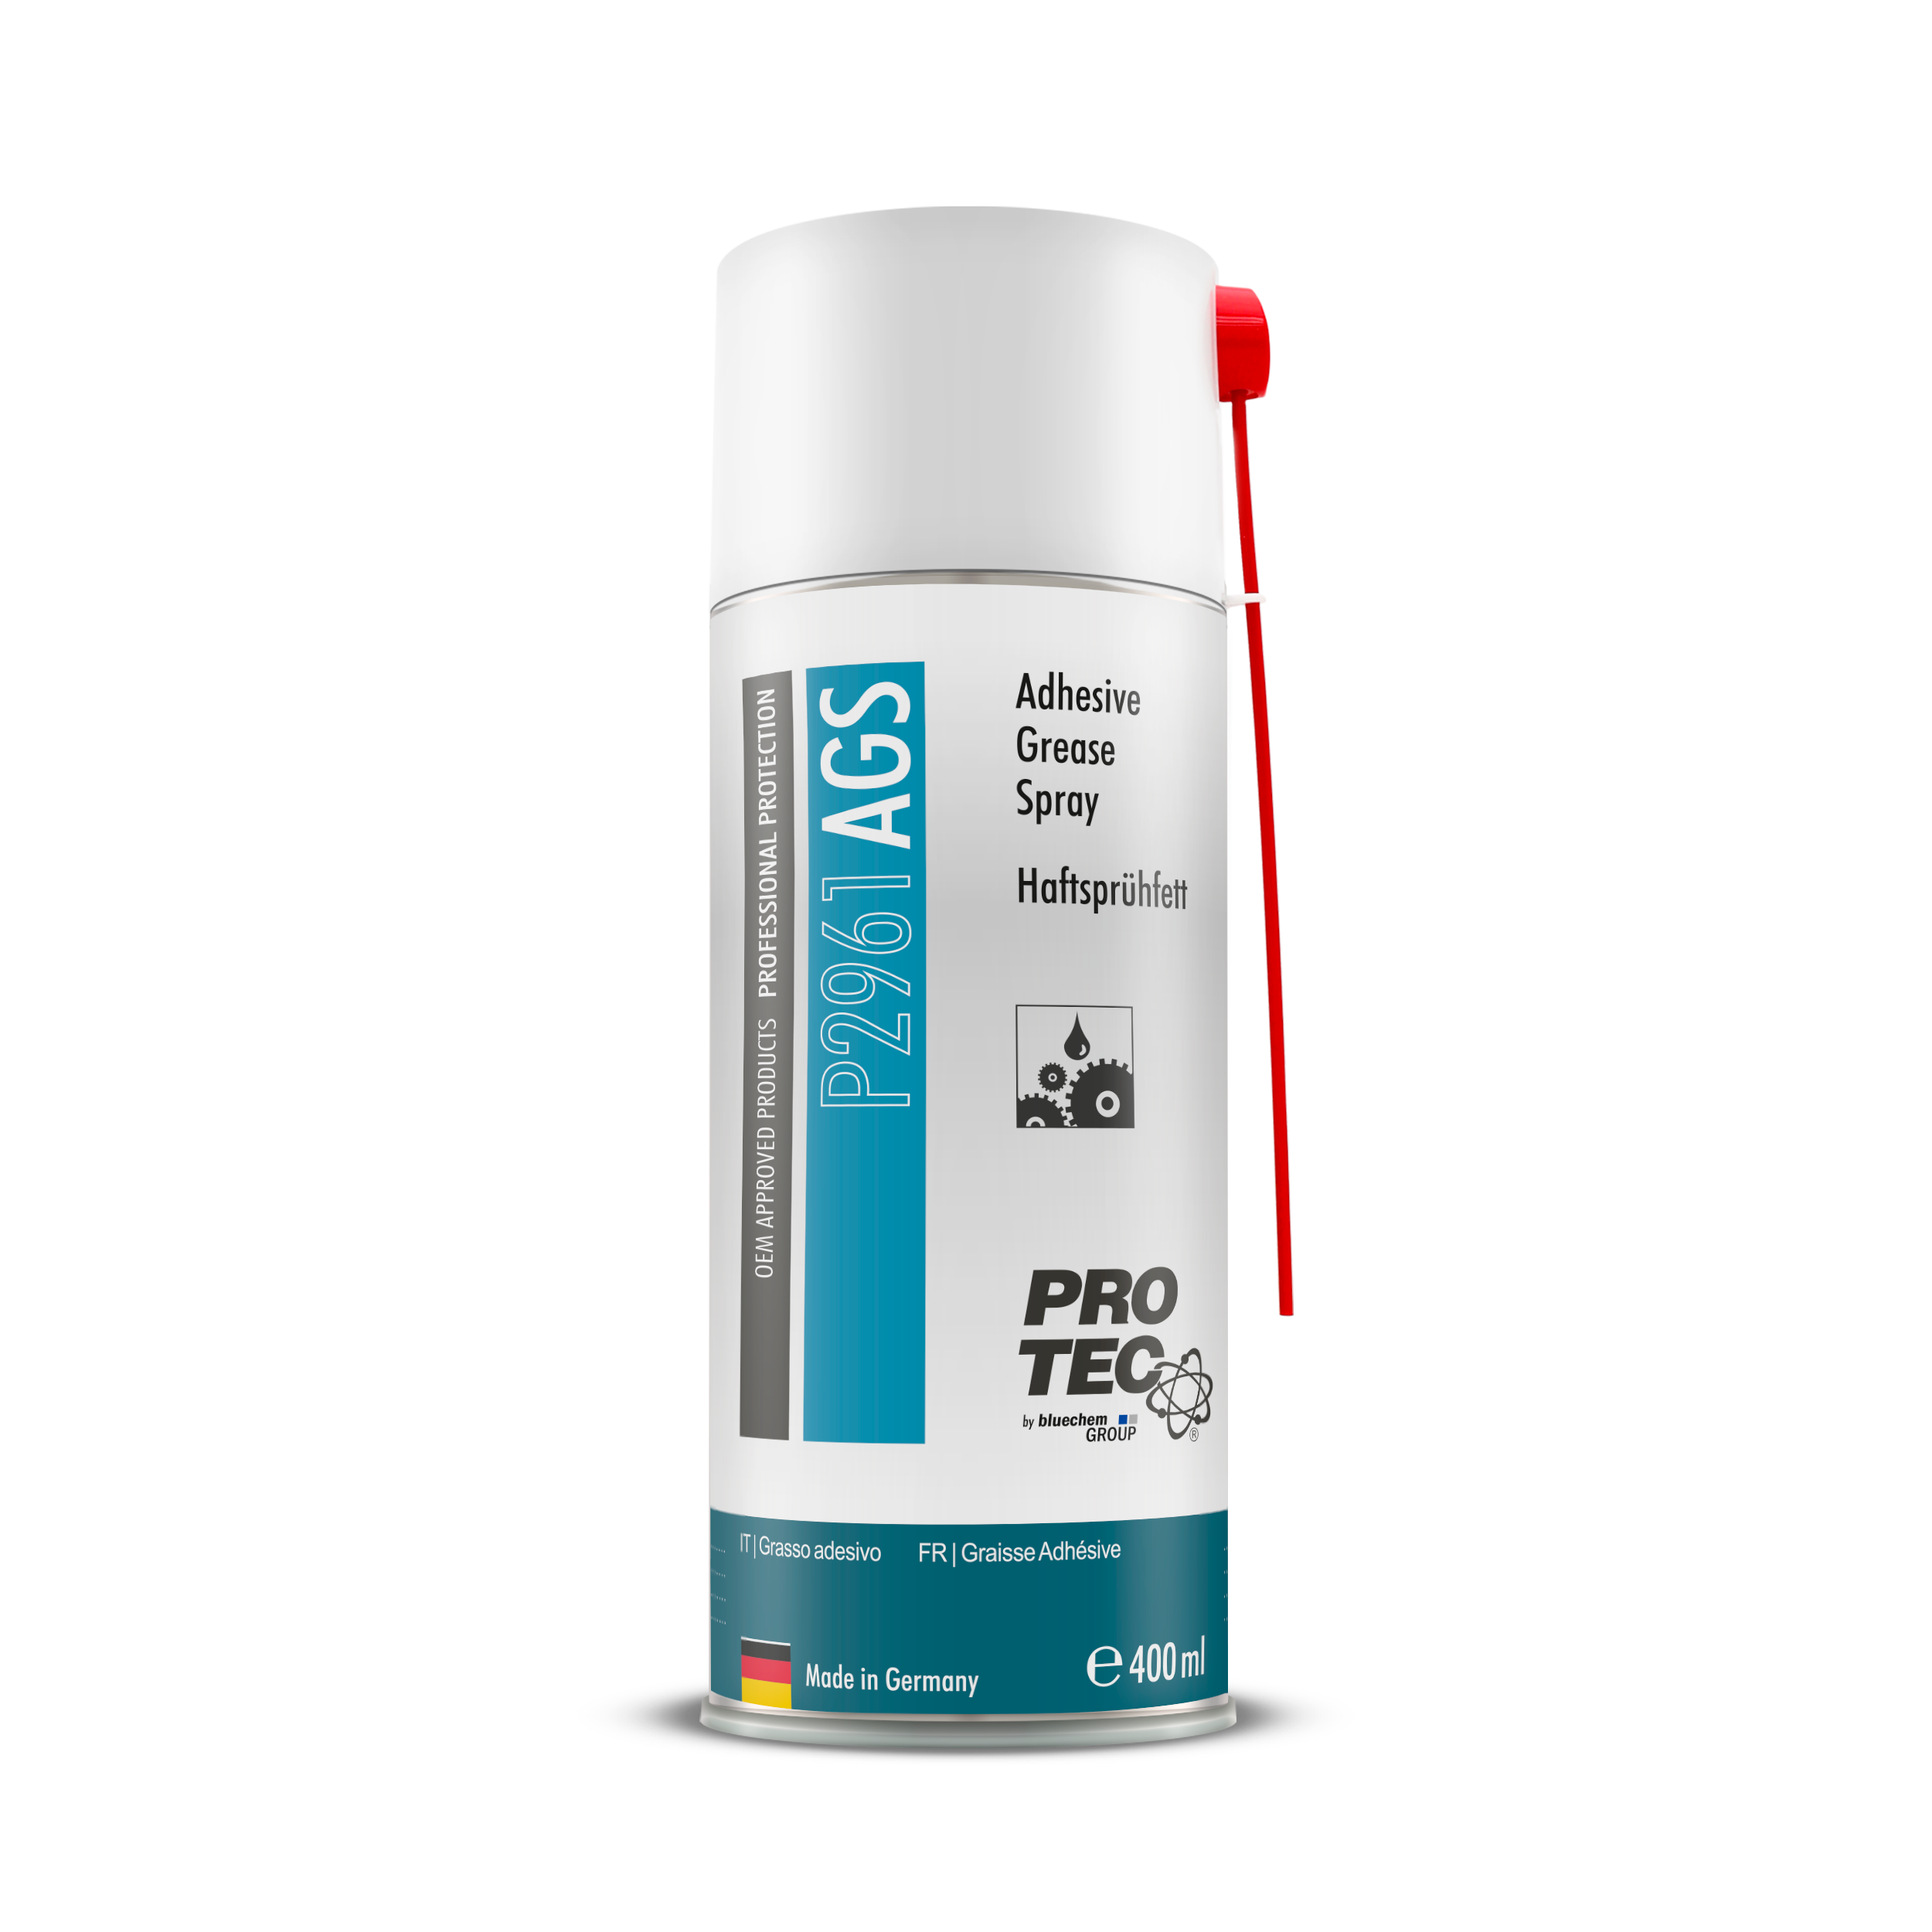 PRO-TEC Adhesive Grease Spray 400ml